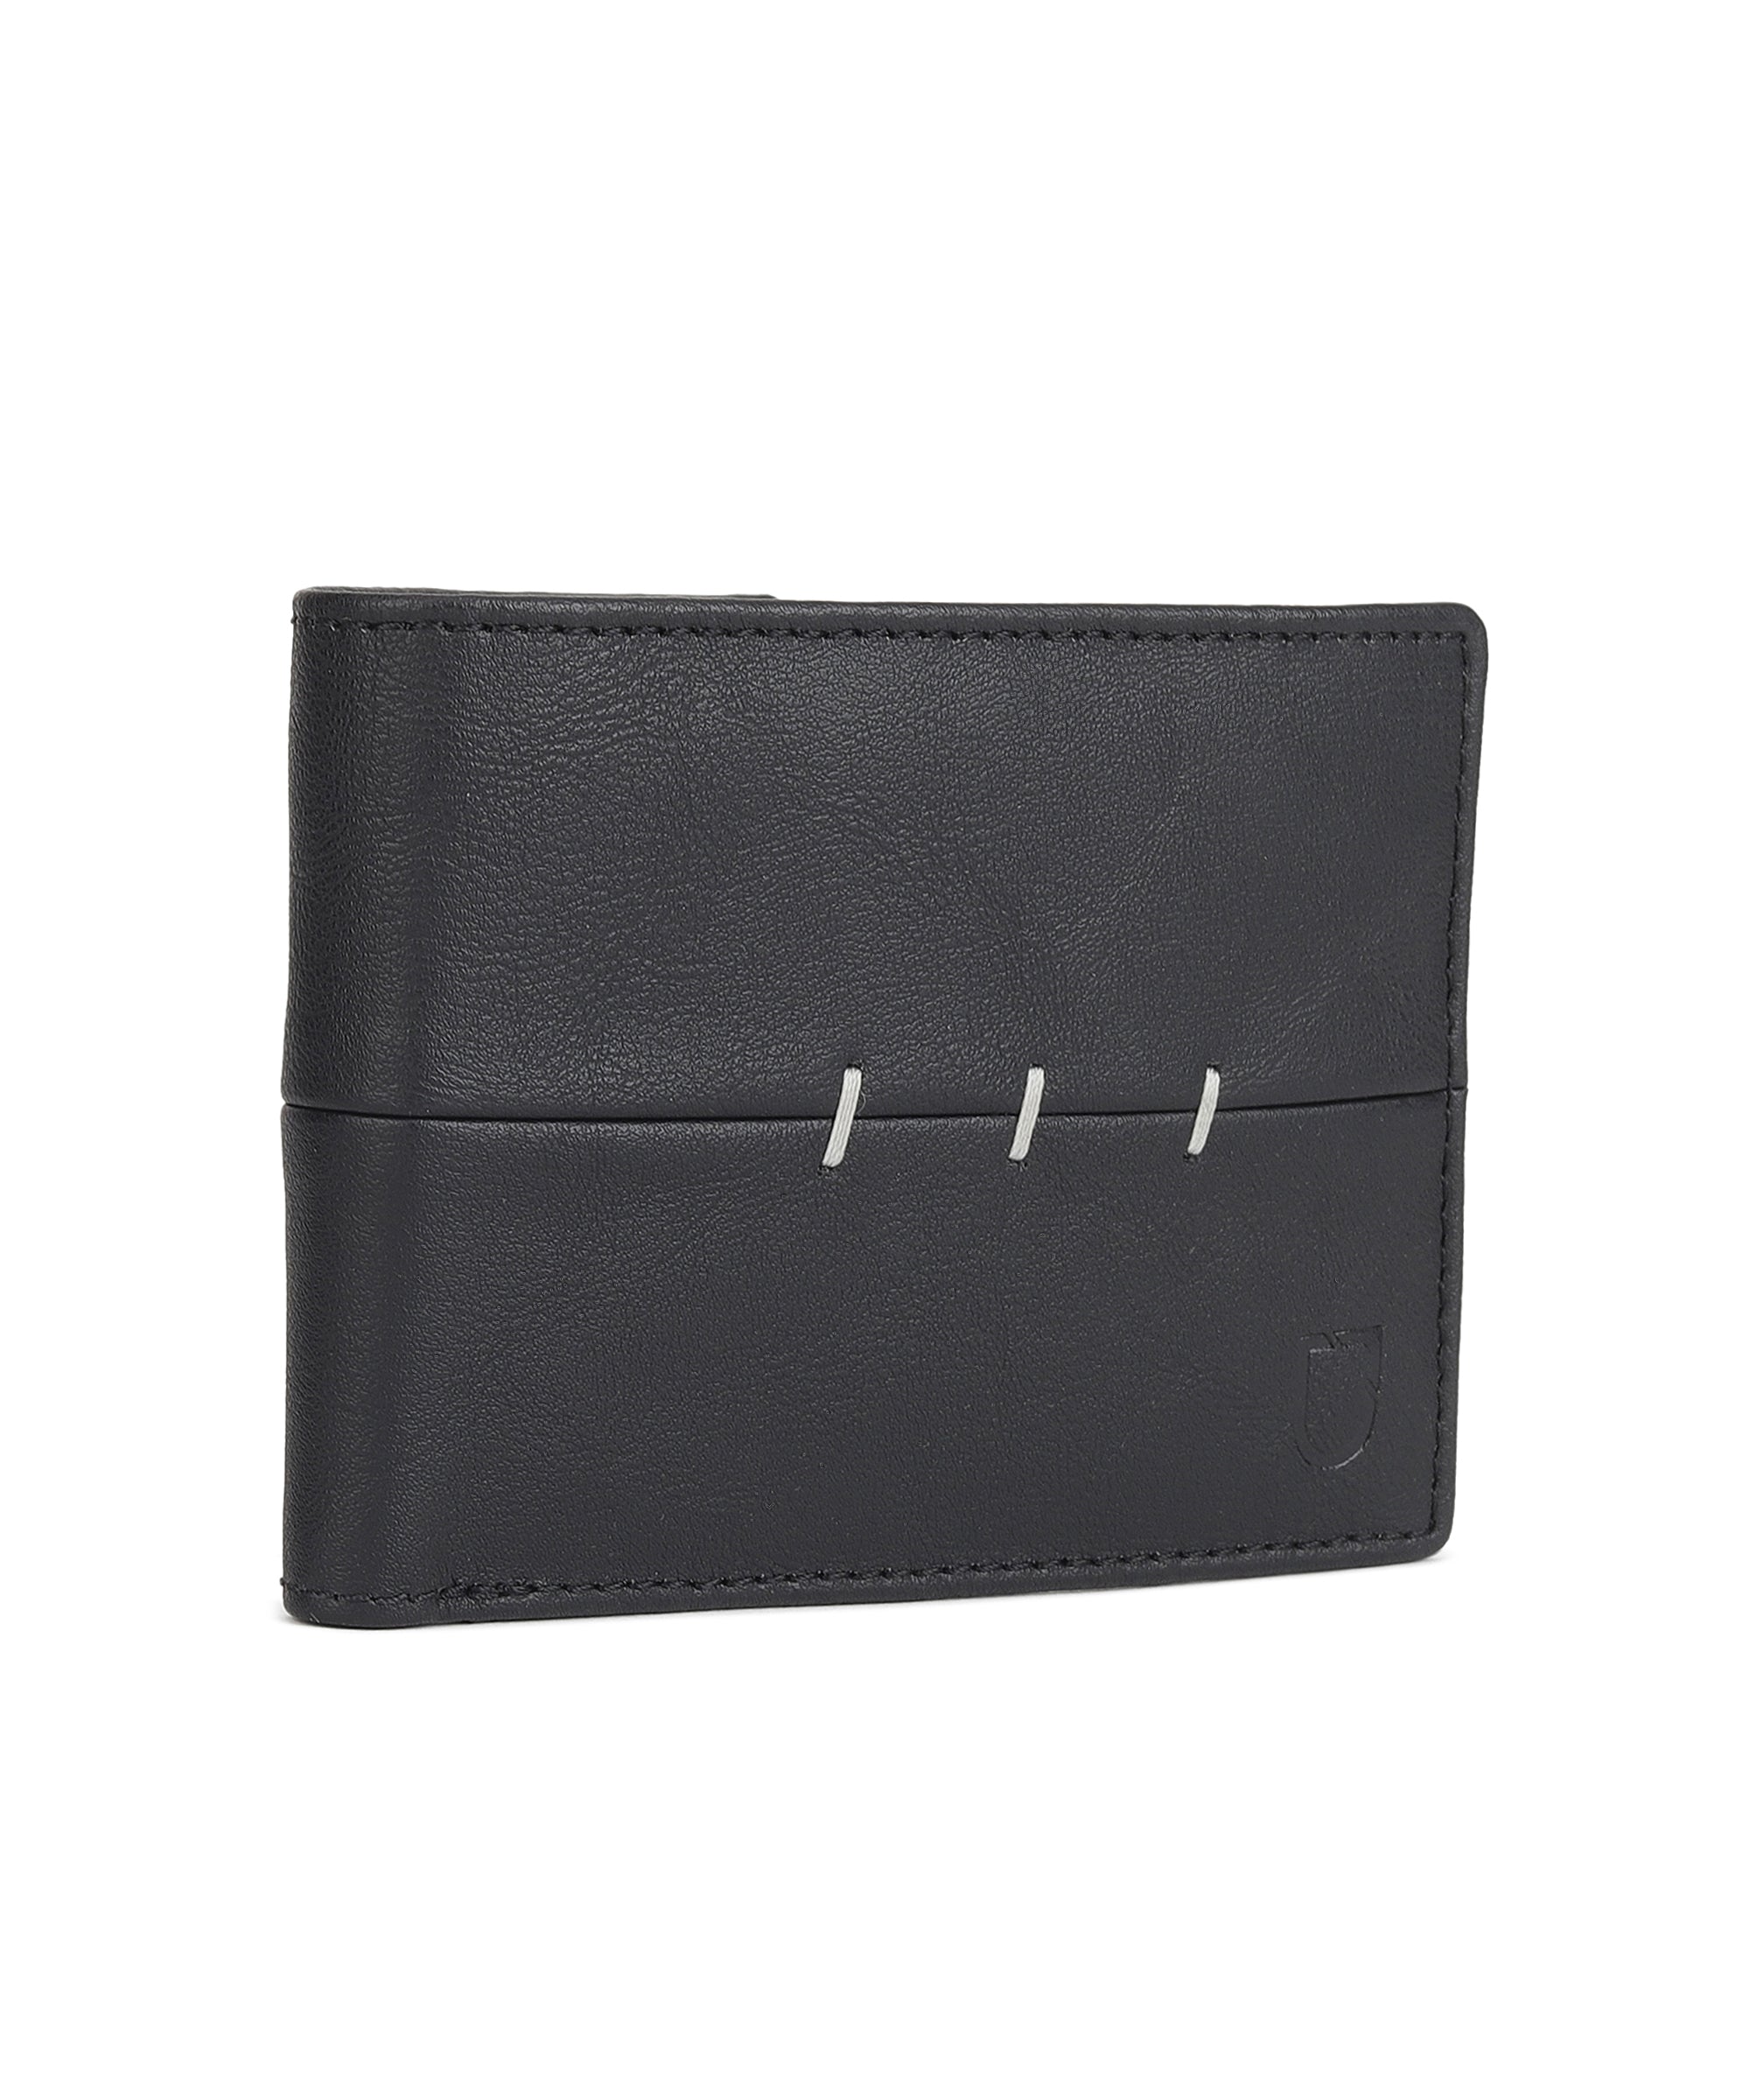 Urbano Fashion Men's Black Casual, Formal Leather Wallet-6 Card Slots